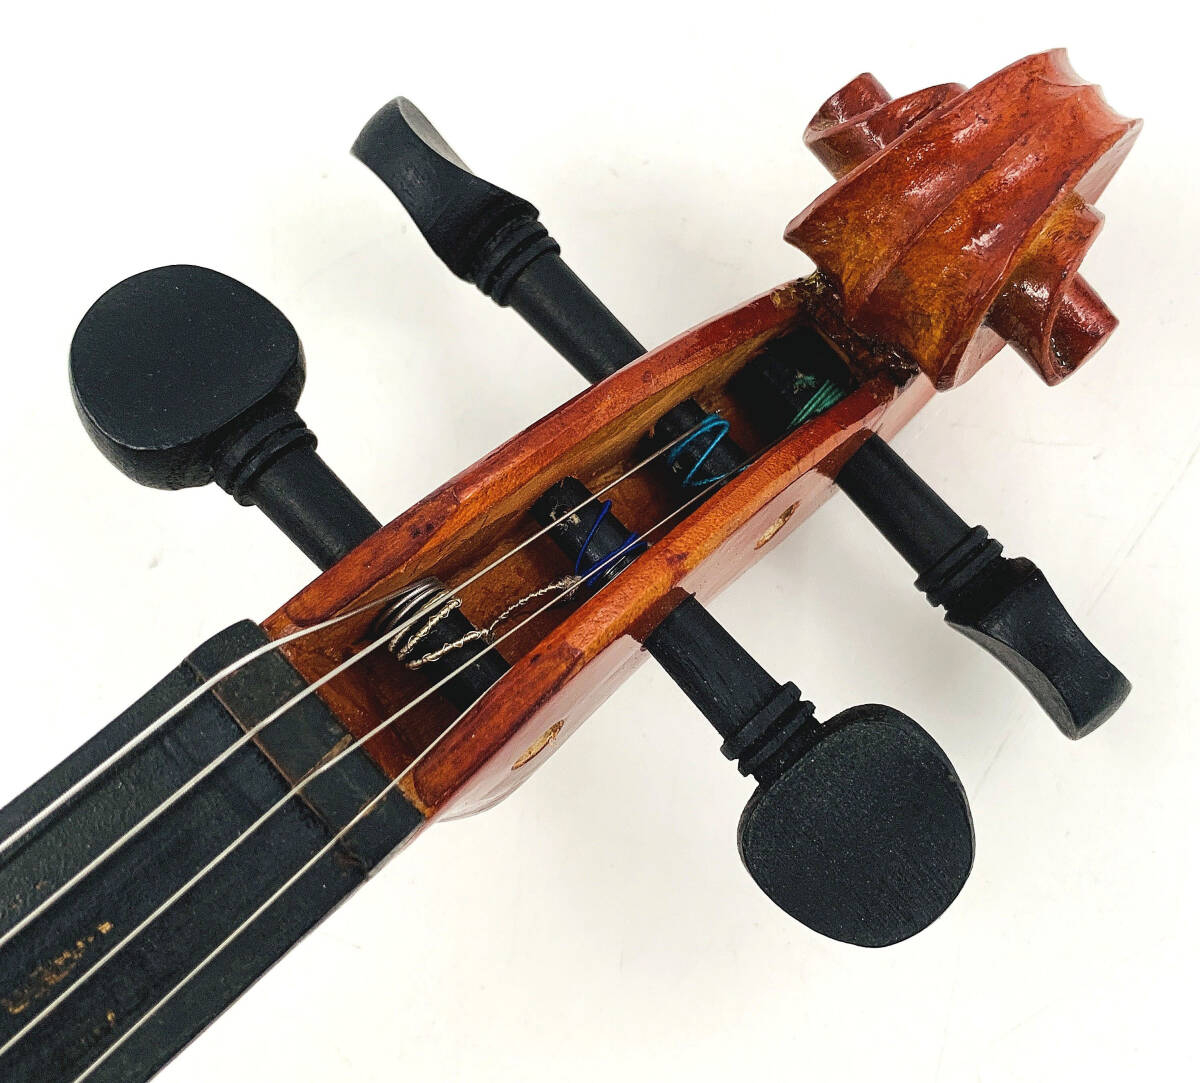 Cremona クレモナ バイオリン 4/4 Fecit Anno Domini19 ヴァイオリン made in China SIEGLER 弓 ハードケース 予備弦 付属【整備調整済み】の画像4